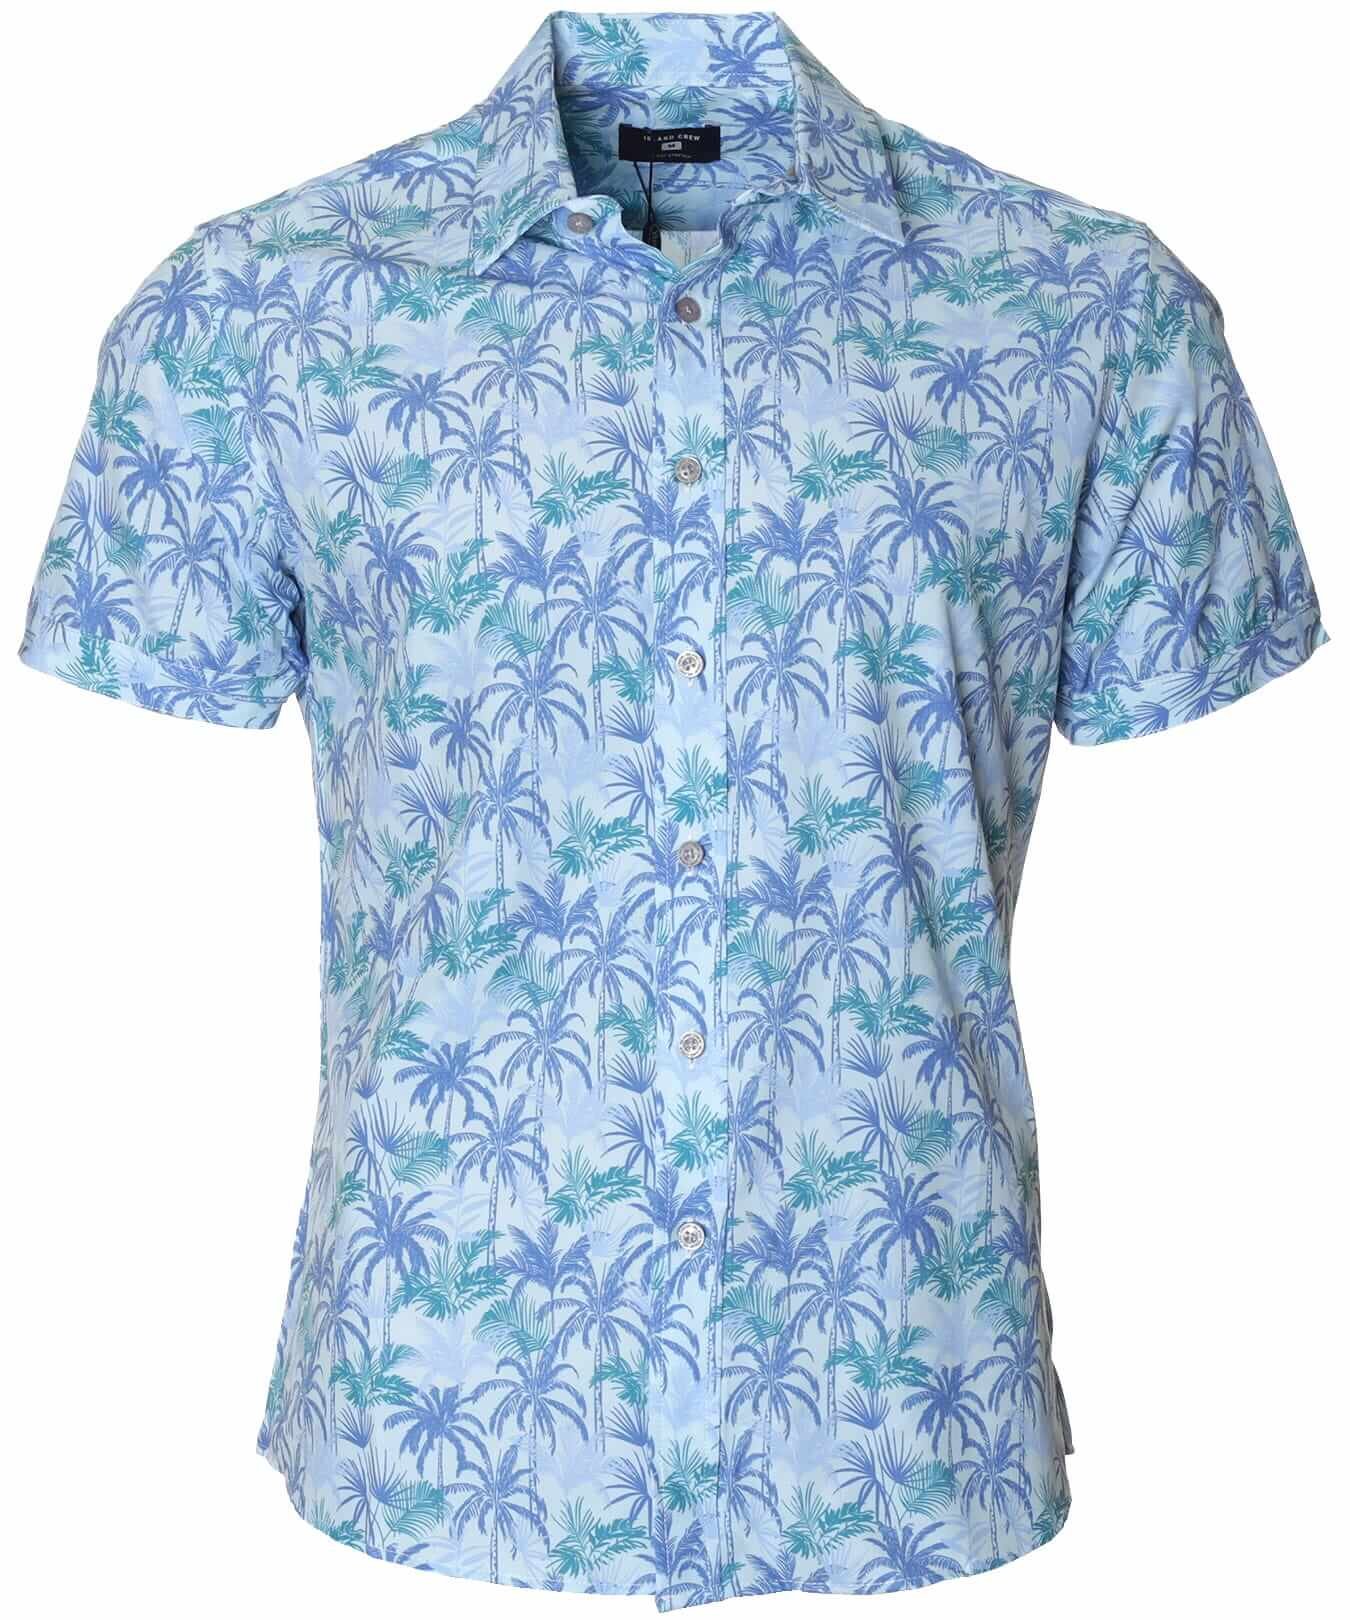 Coco Palm Poly Cotton Aloha Shirt Light Sky Blue